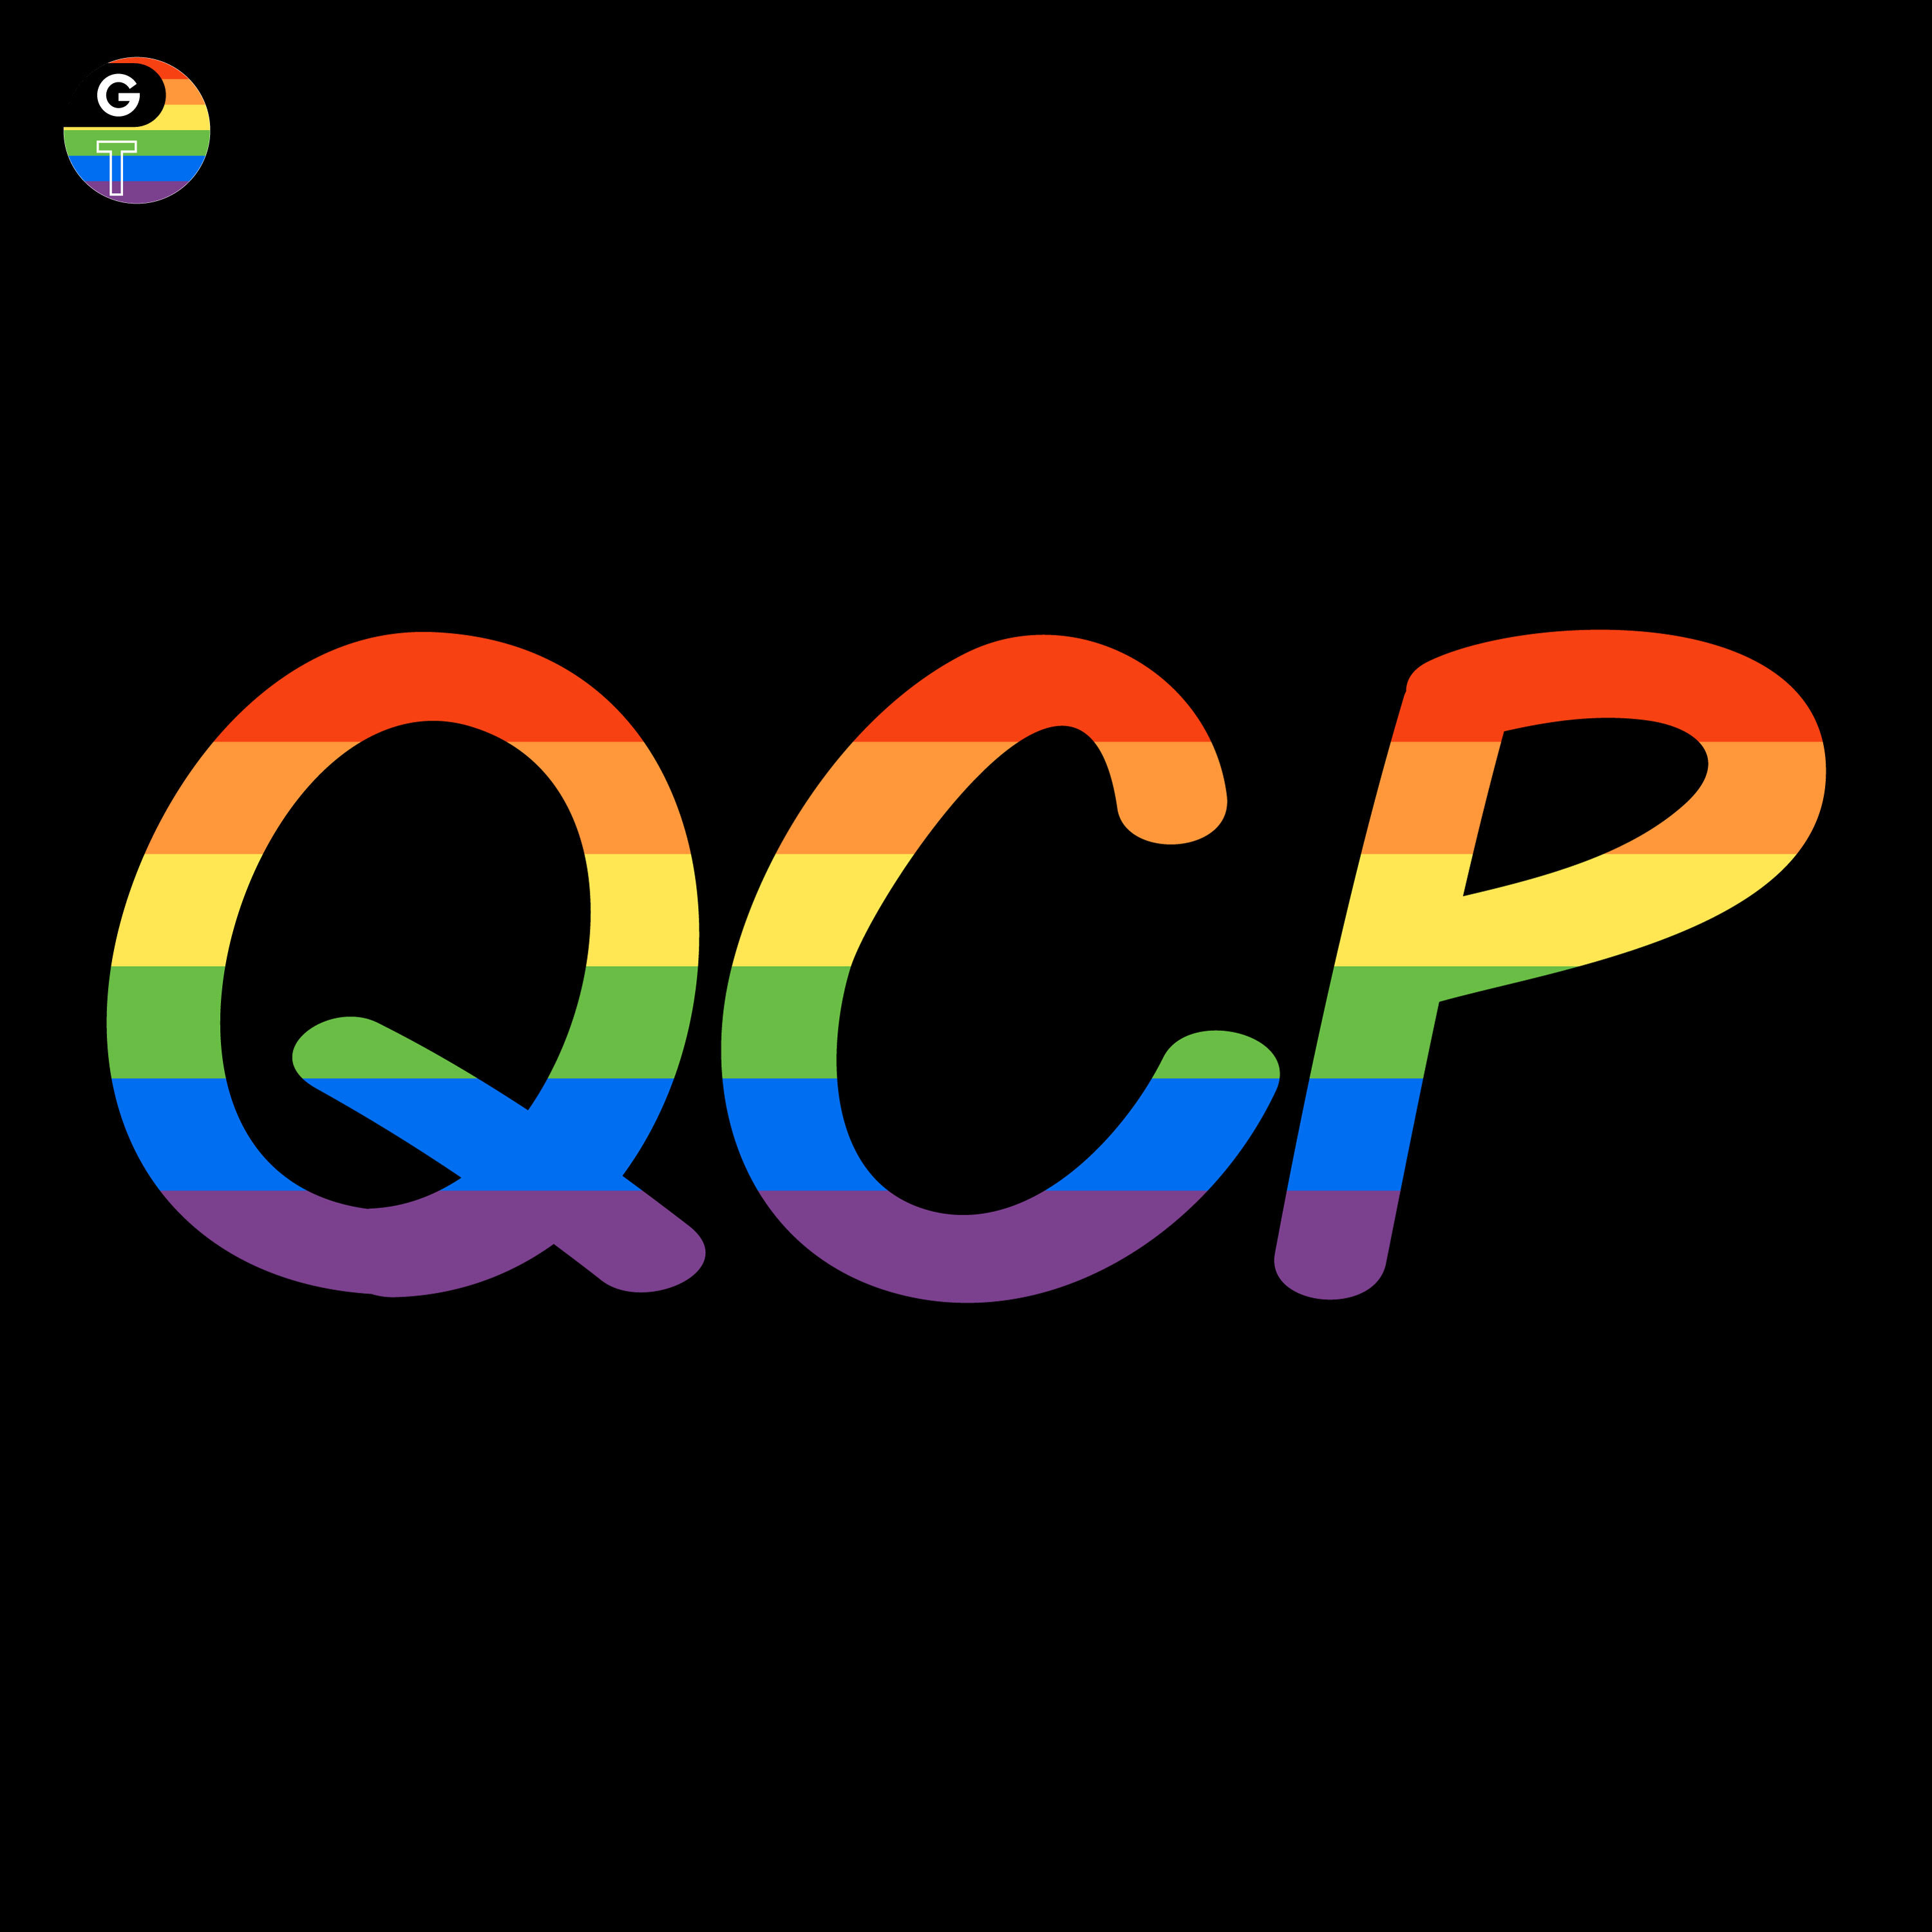 Queer Comics Podcast